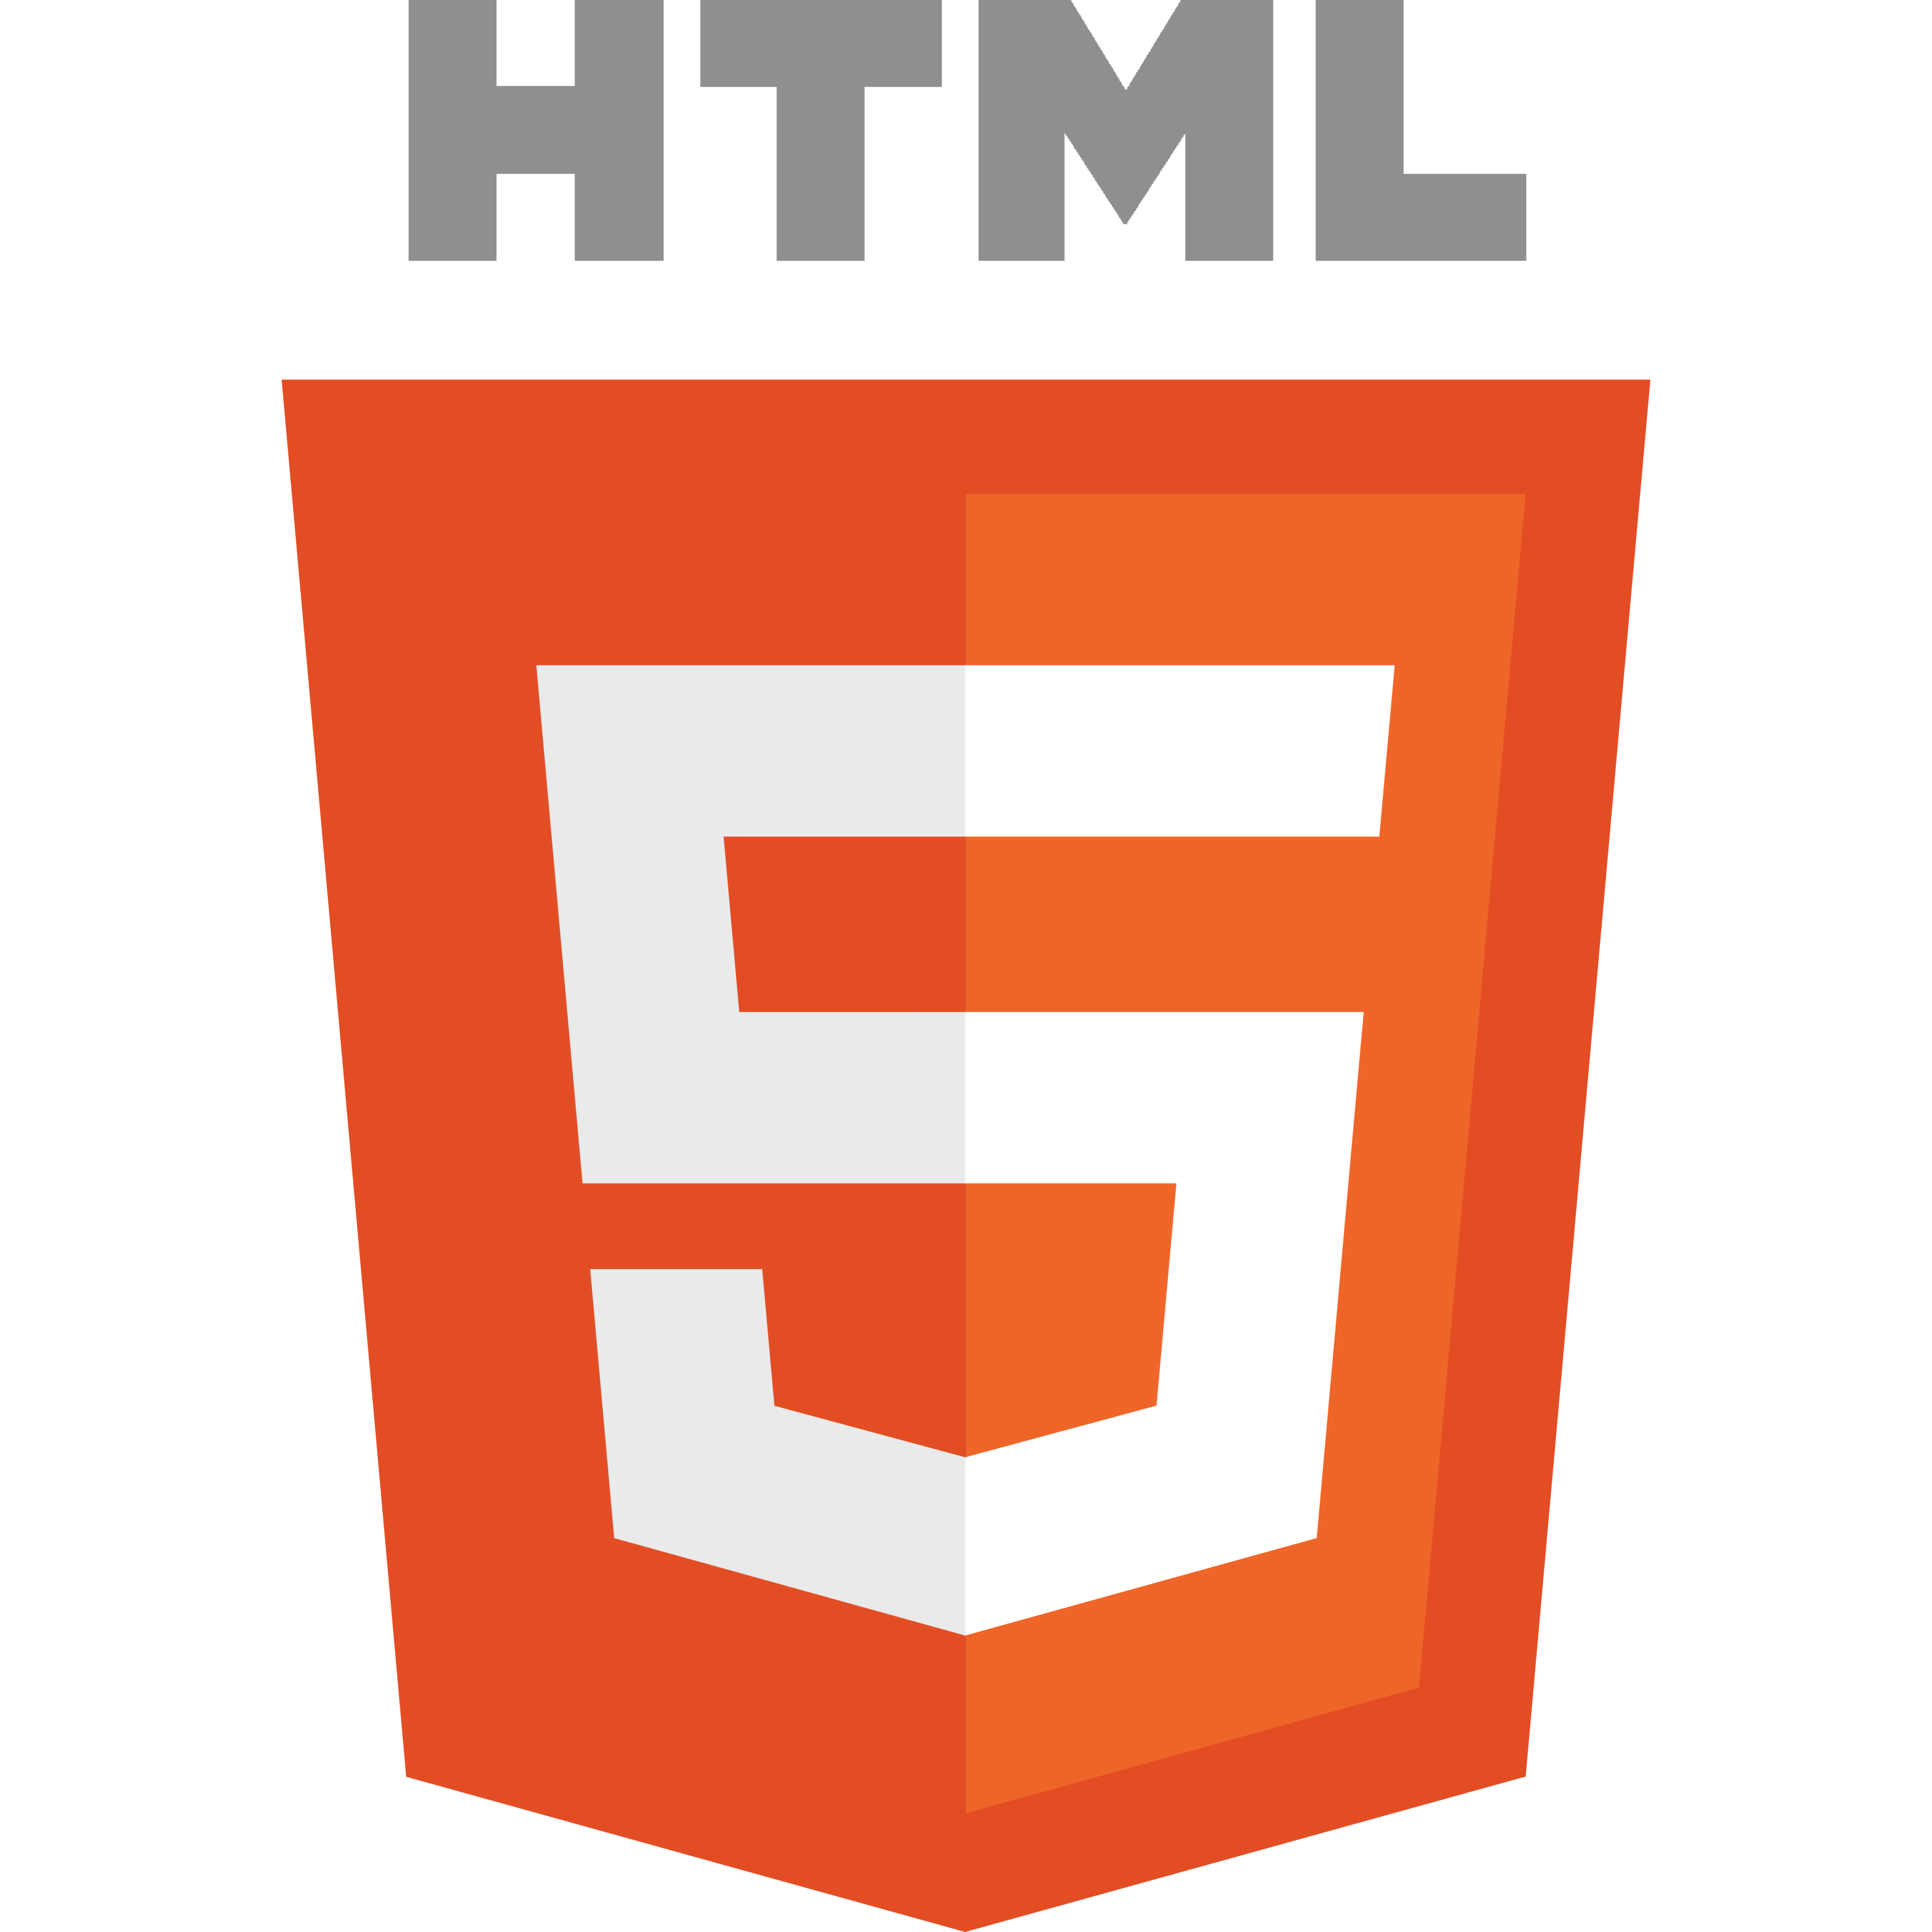 Gry HTML5